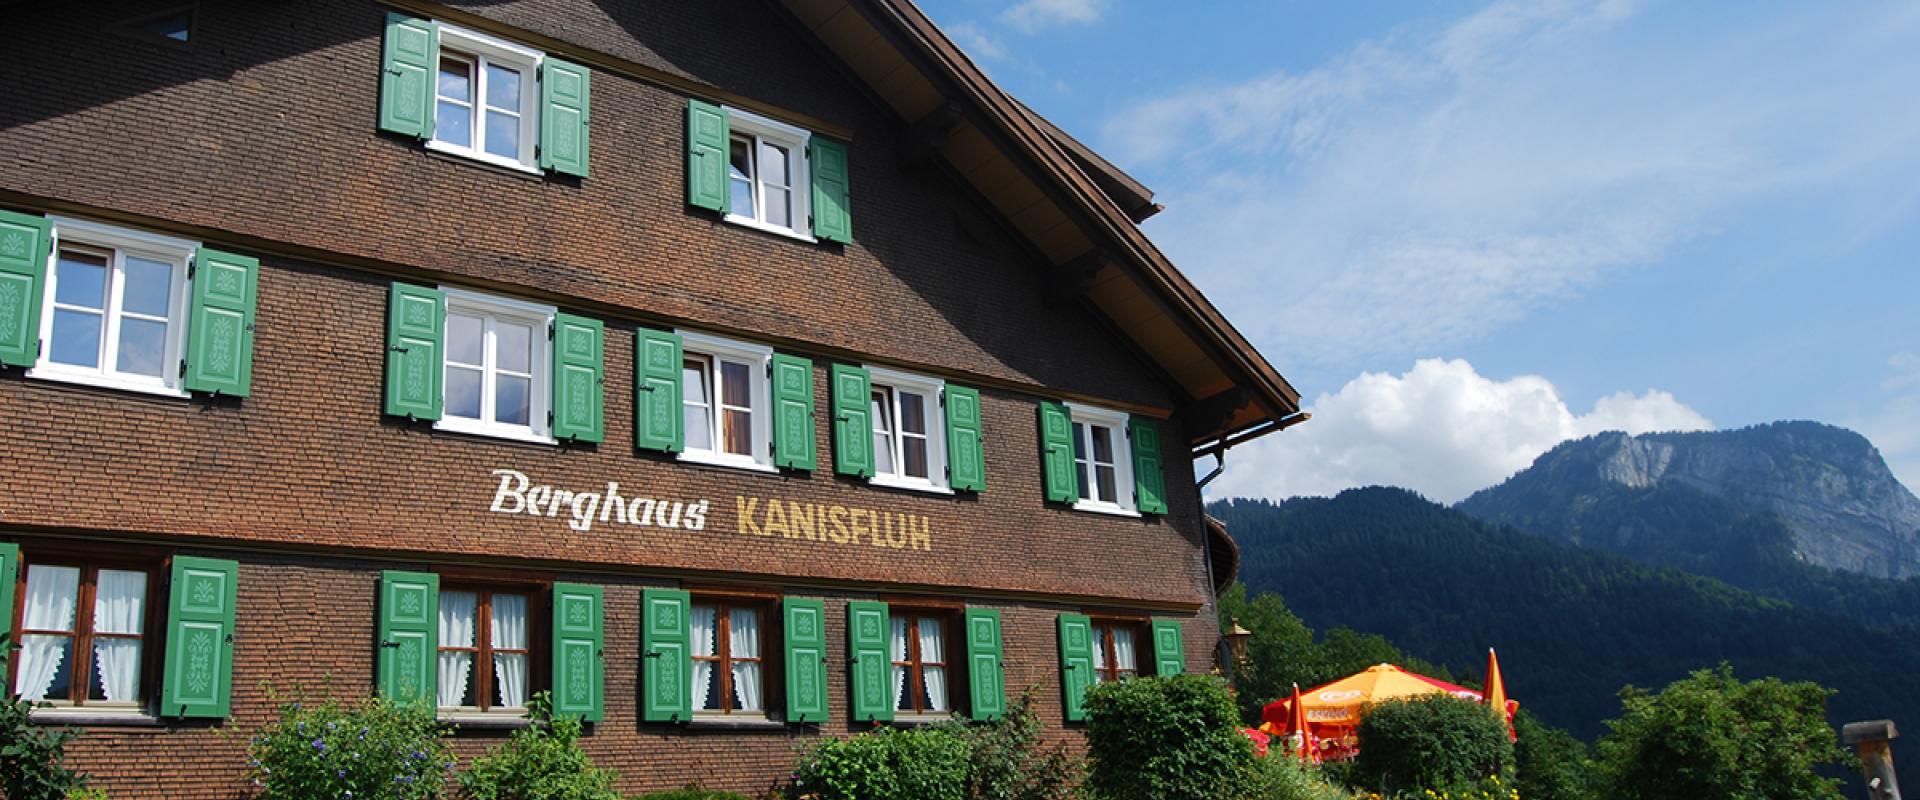 Berghaus Kanisfluh Front